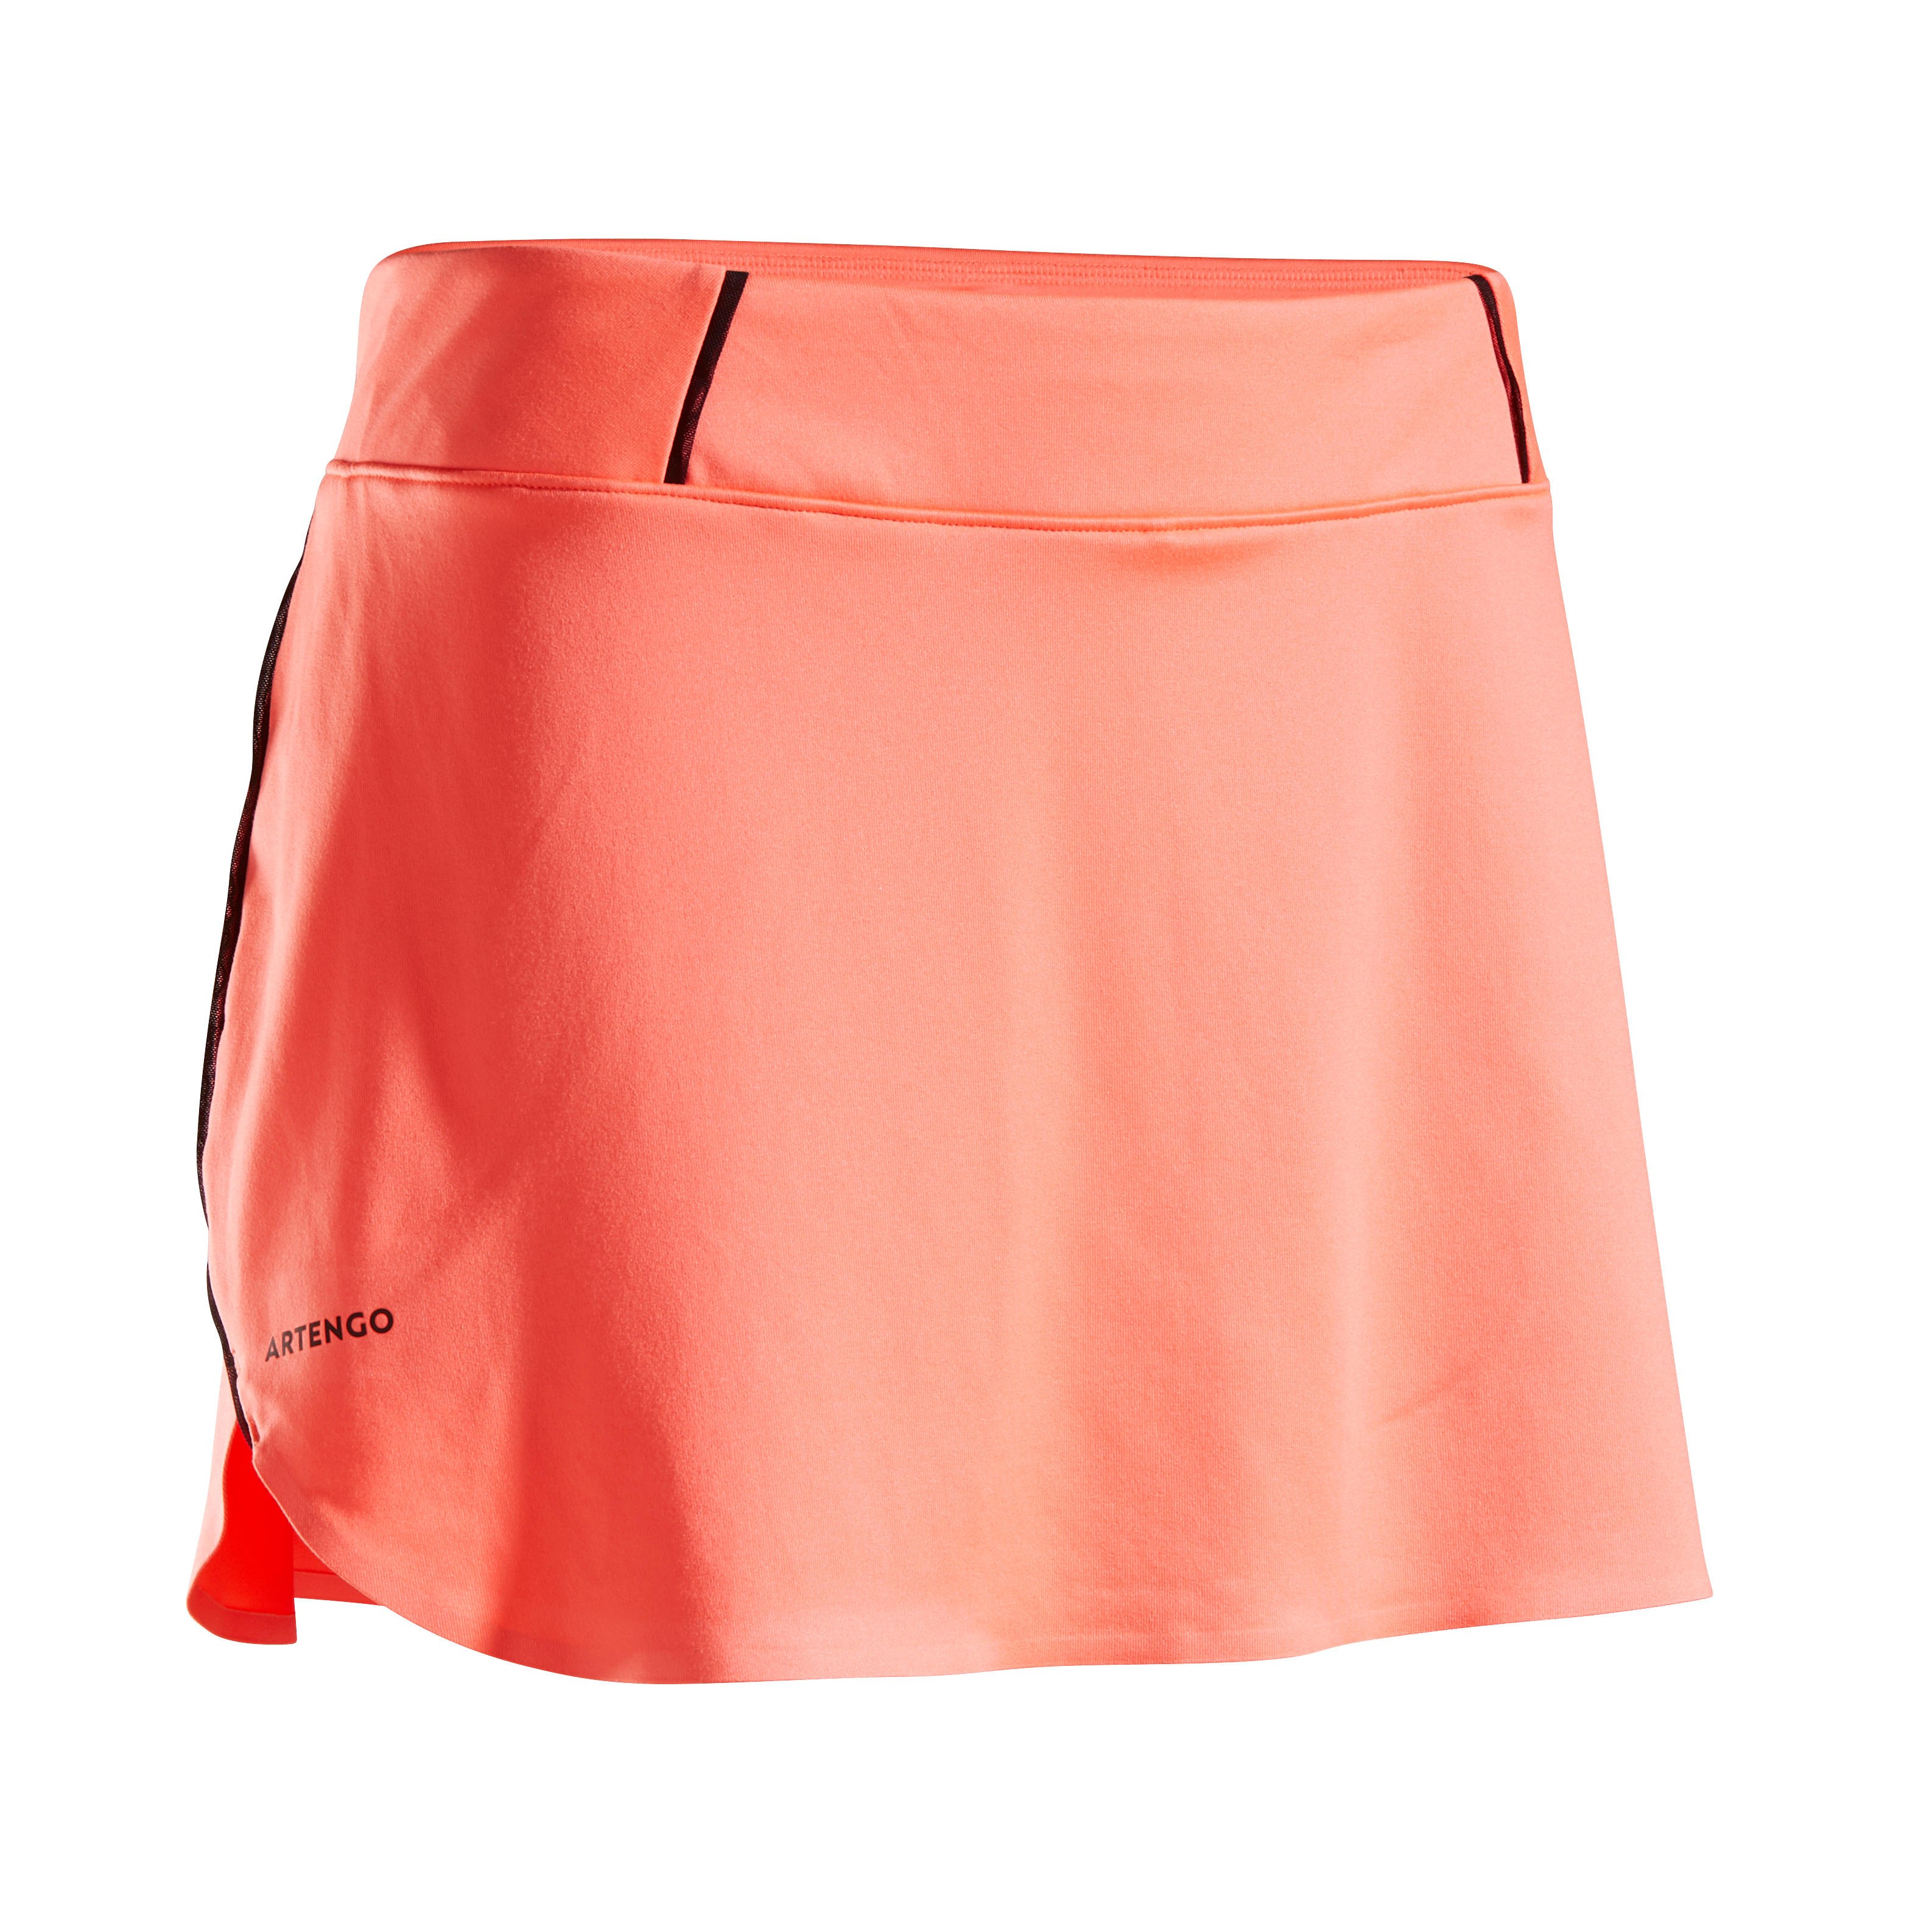 decathlon tennis skirts